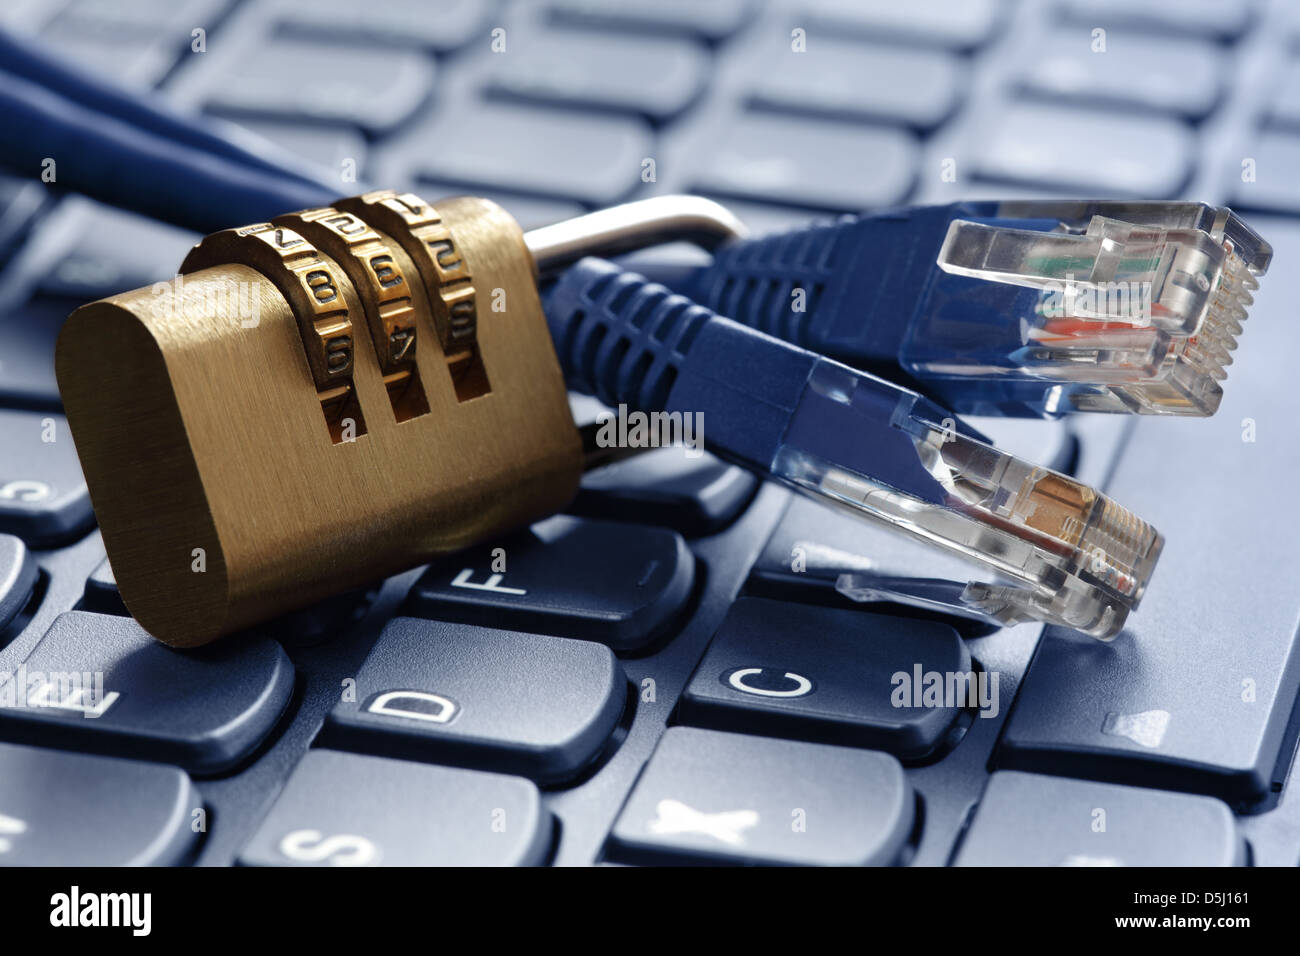 Internet security Stock Photo